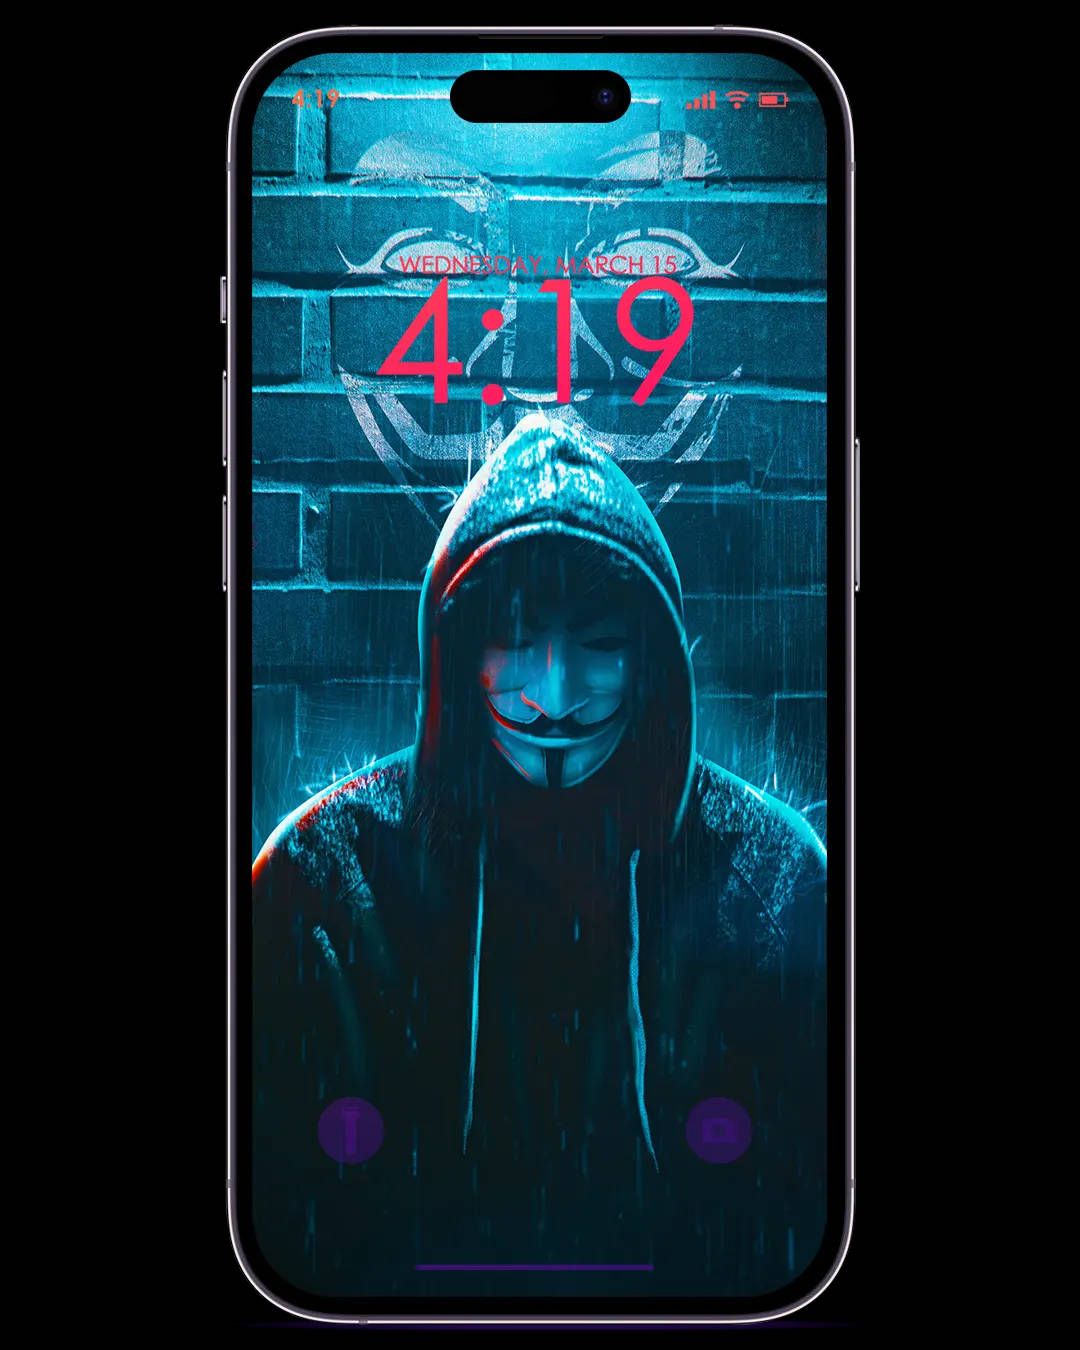 Anonymehacker-mittwoch Handy Wallpaper